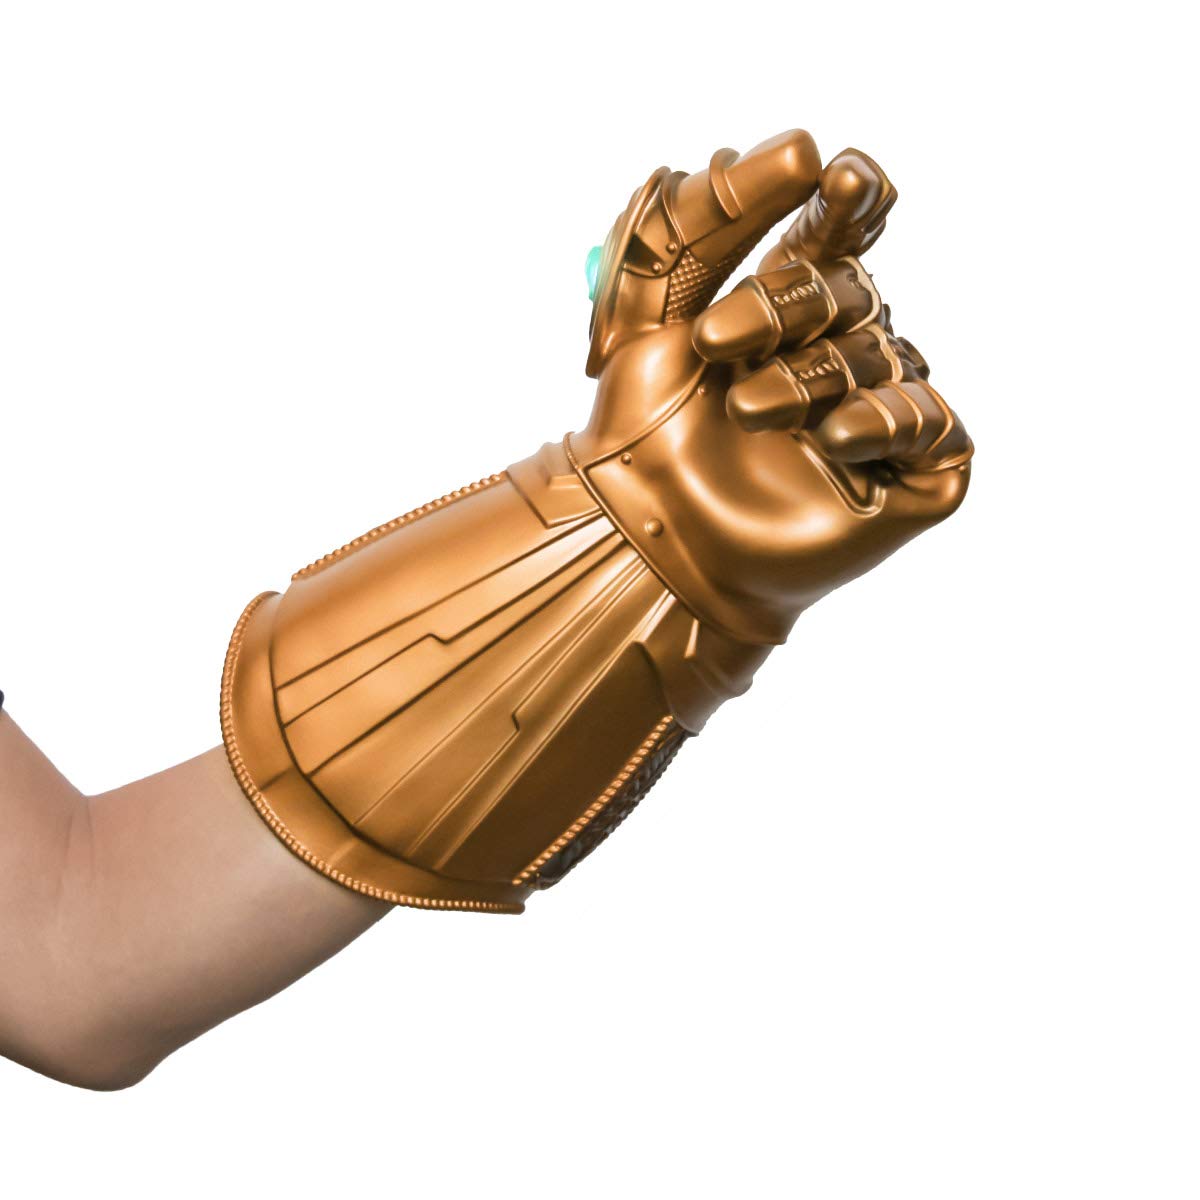 BengPro Infinity War PVC Light Up Electronic Fist Halloween Cosplay Props (Light Up Glove - Child)